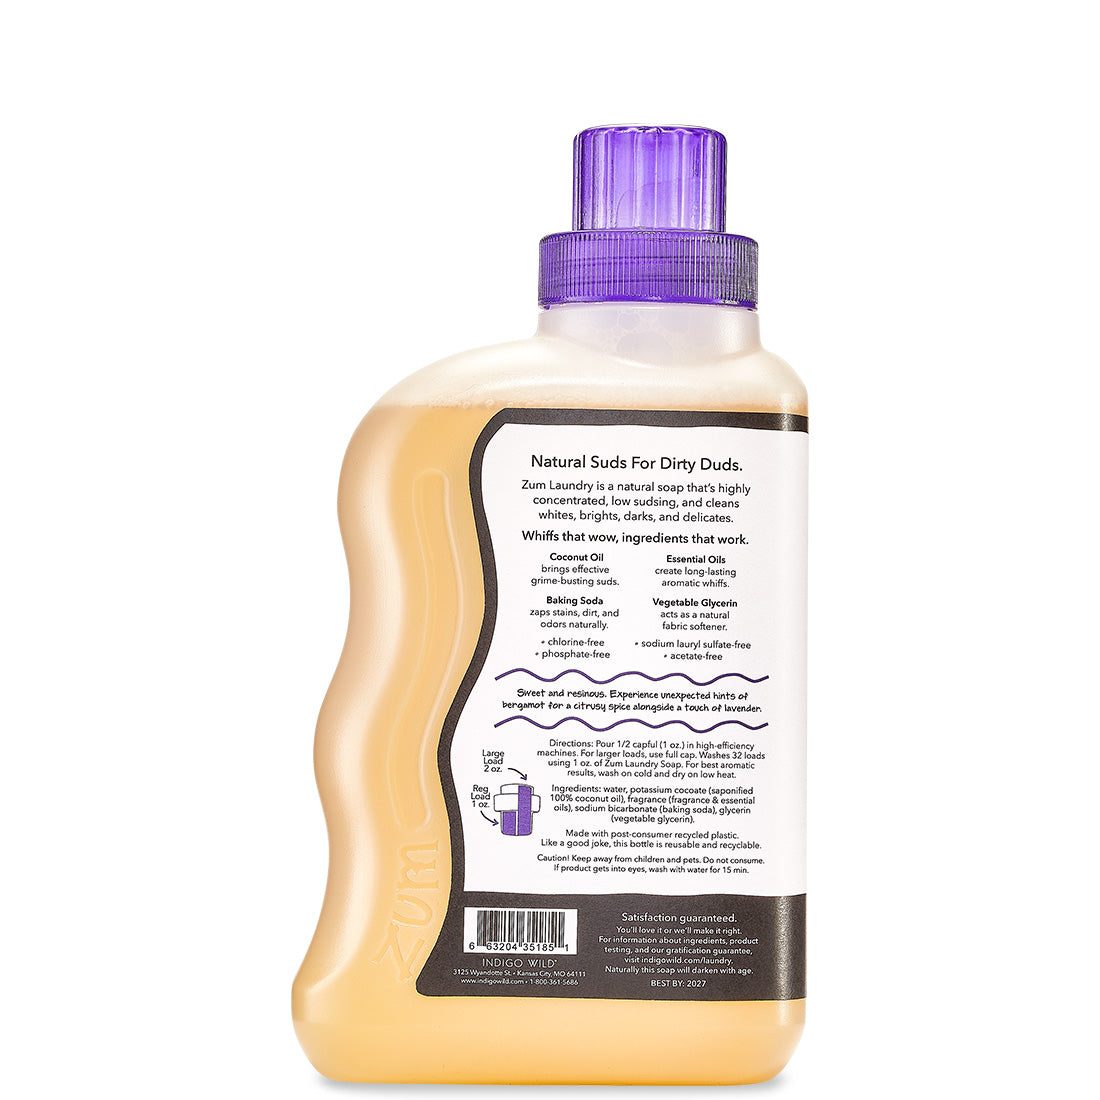 Back view of plastic bottle with purple cap containing geranium-patchouli scented laundry soap liquid